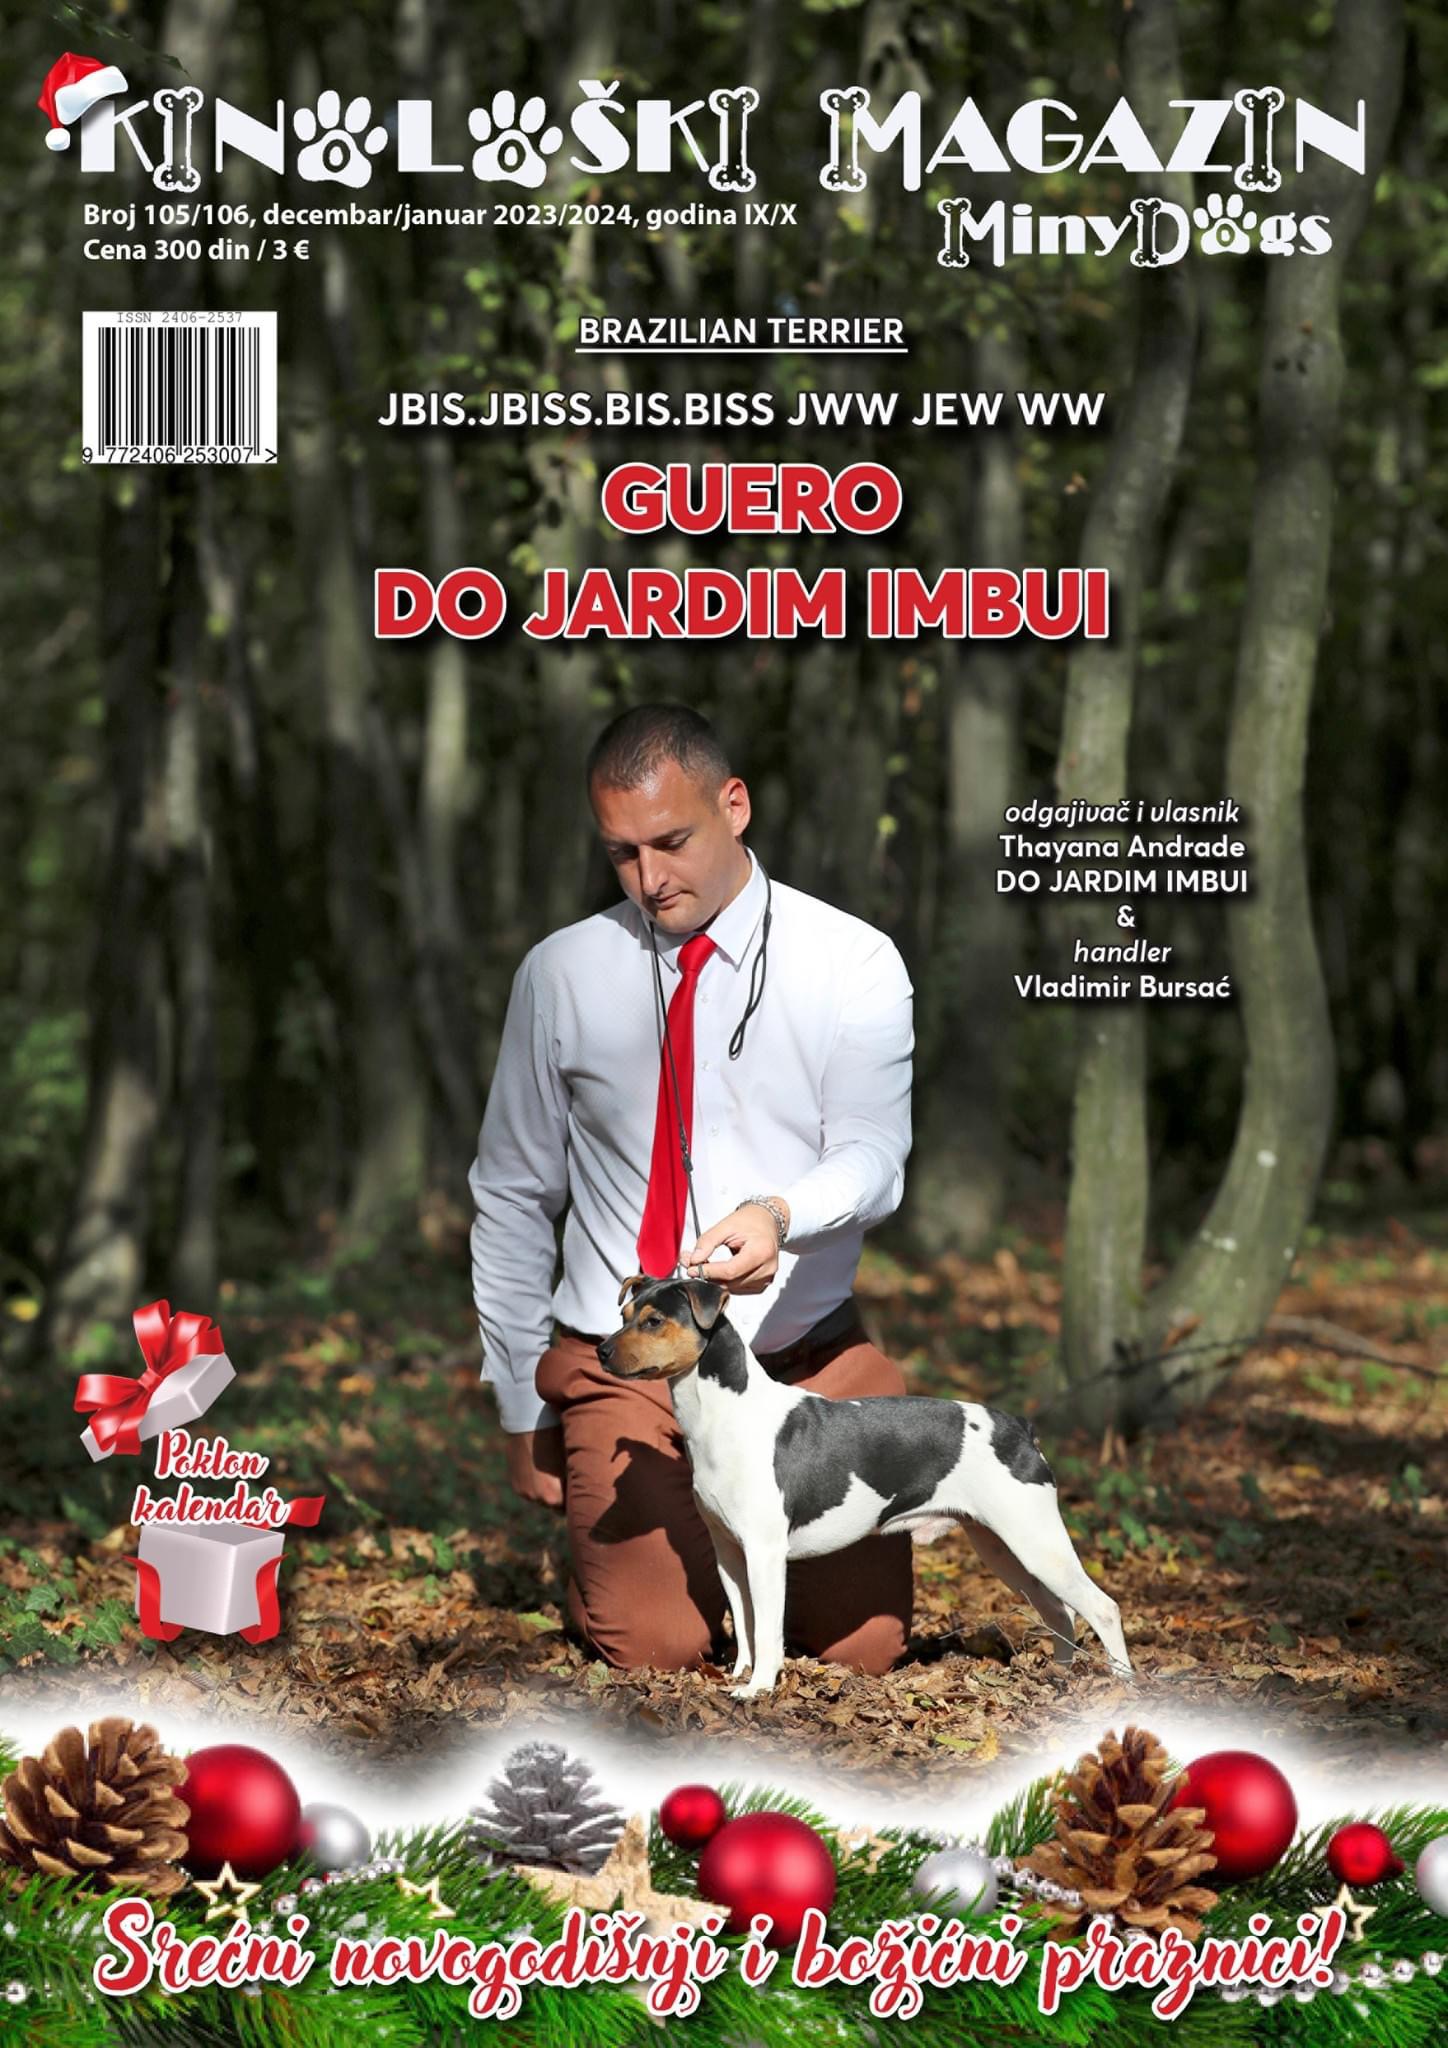 Guero at Serbian magazine cover